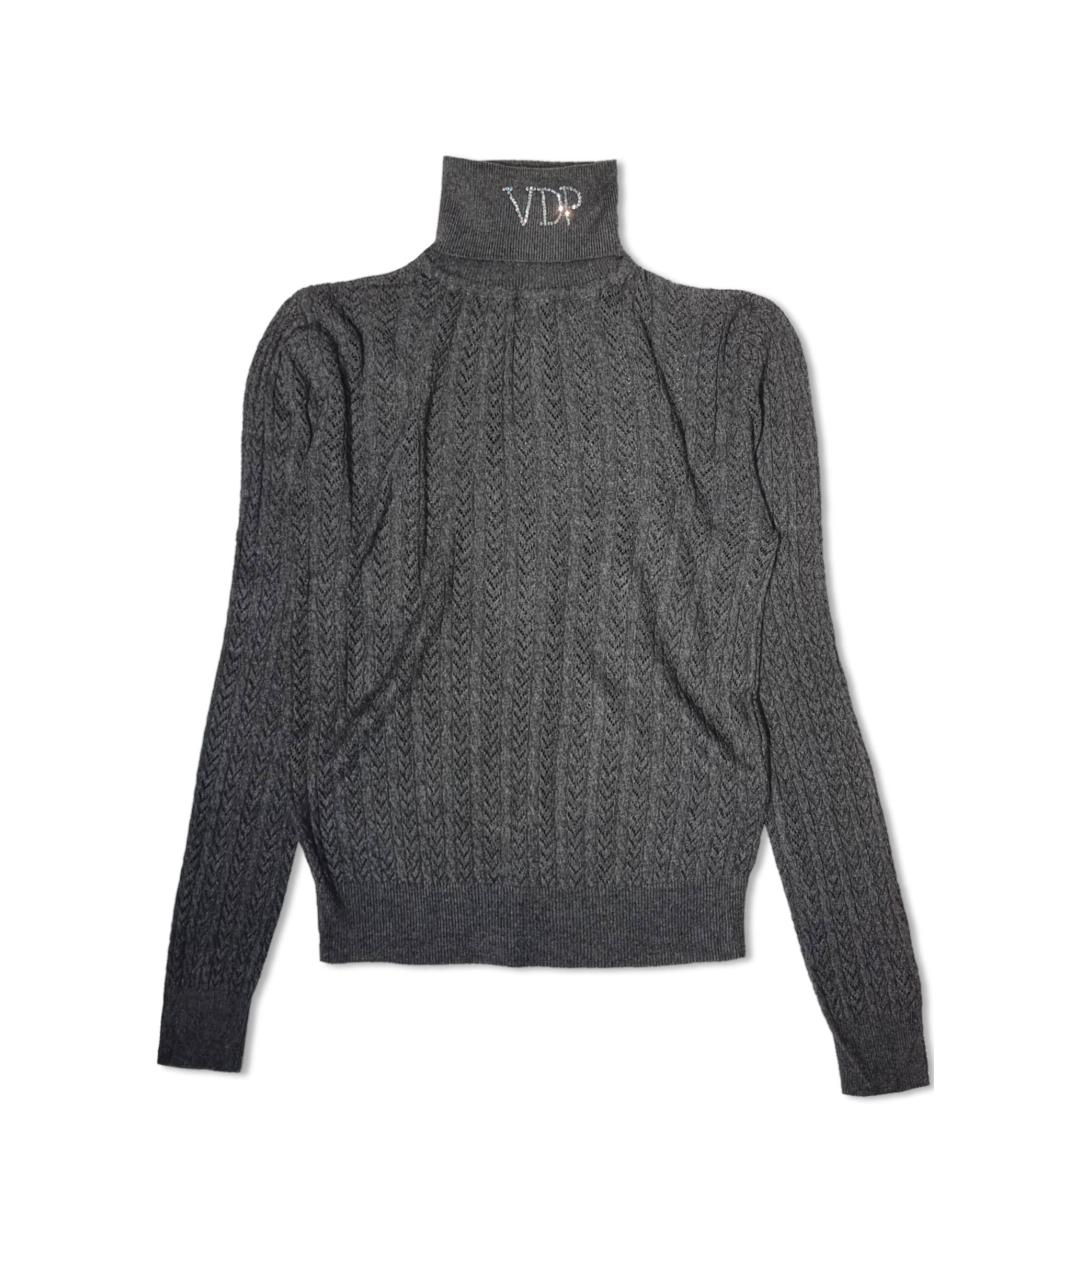 VDP Серый шерстяной джемпер / свитер, фото 1